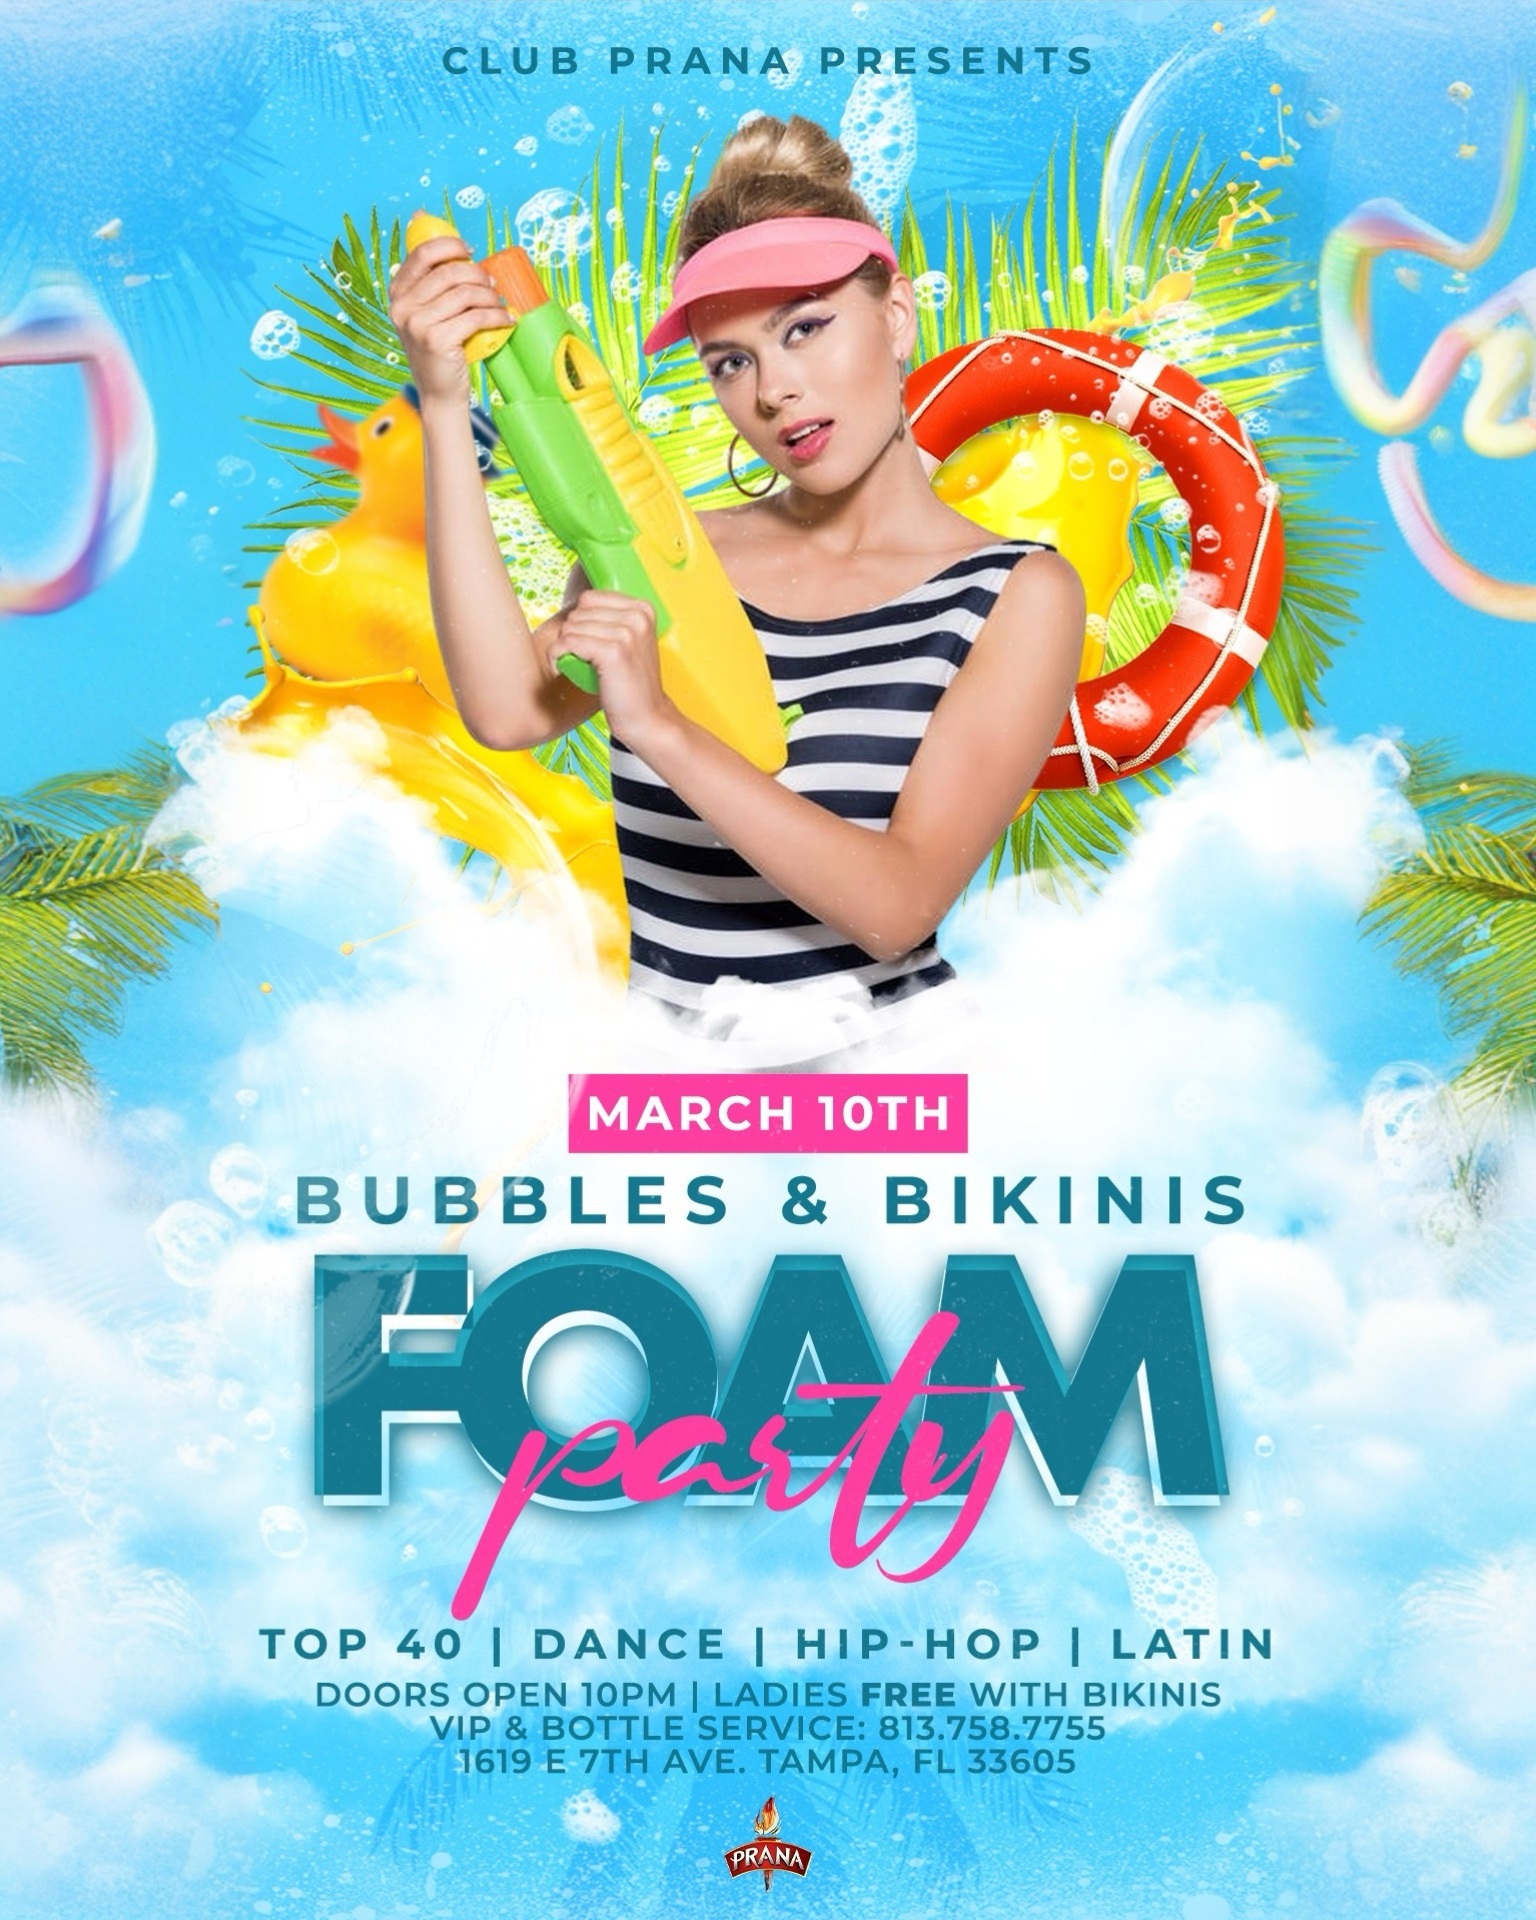 Bubbles & Bikinis Foam Party - Spring Break At Club Prana March 10th